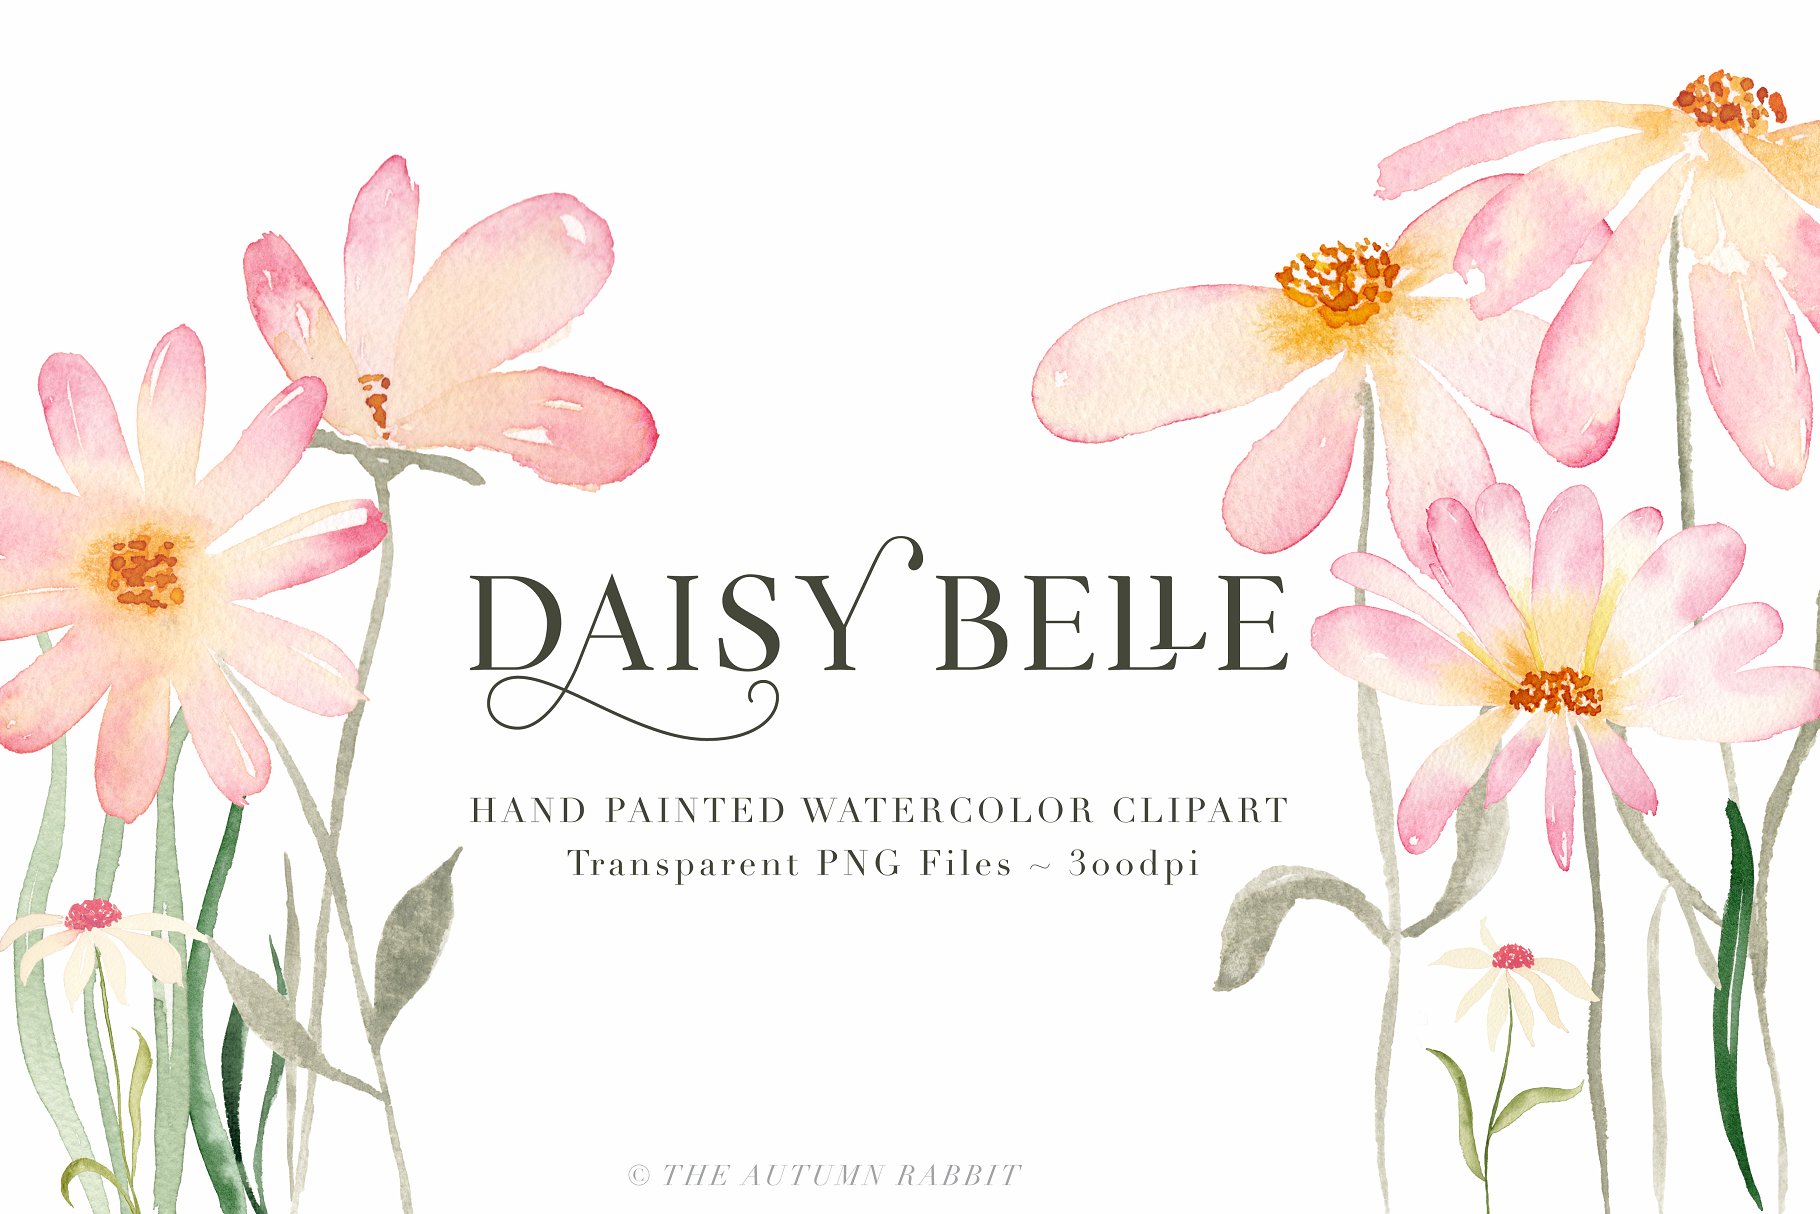 独立手绘花卉树叶图像 Daisy Belle – Watercolor Flowers插图